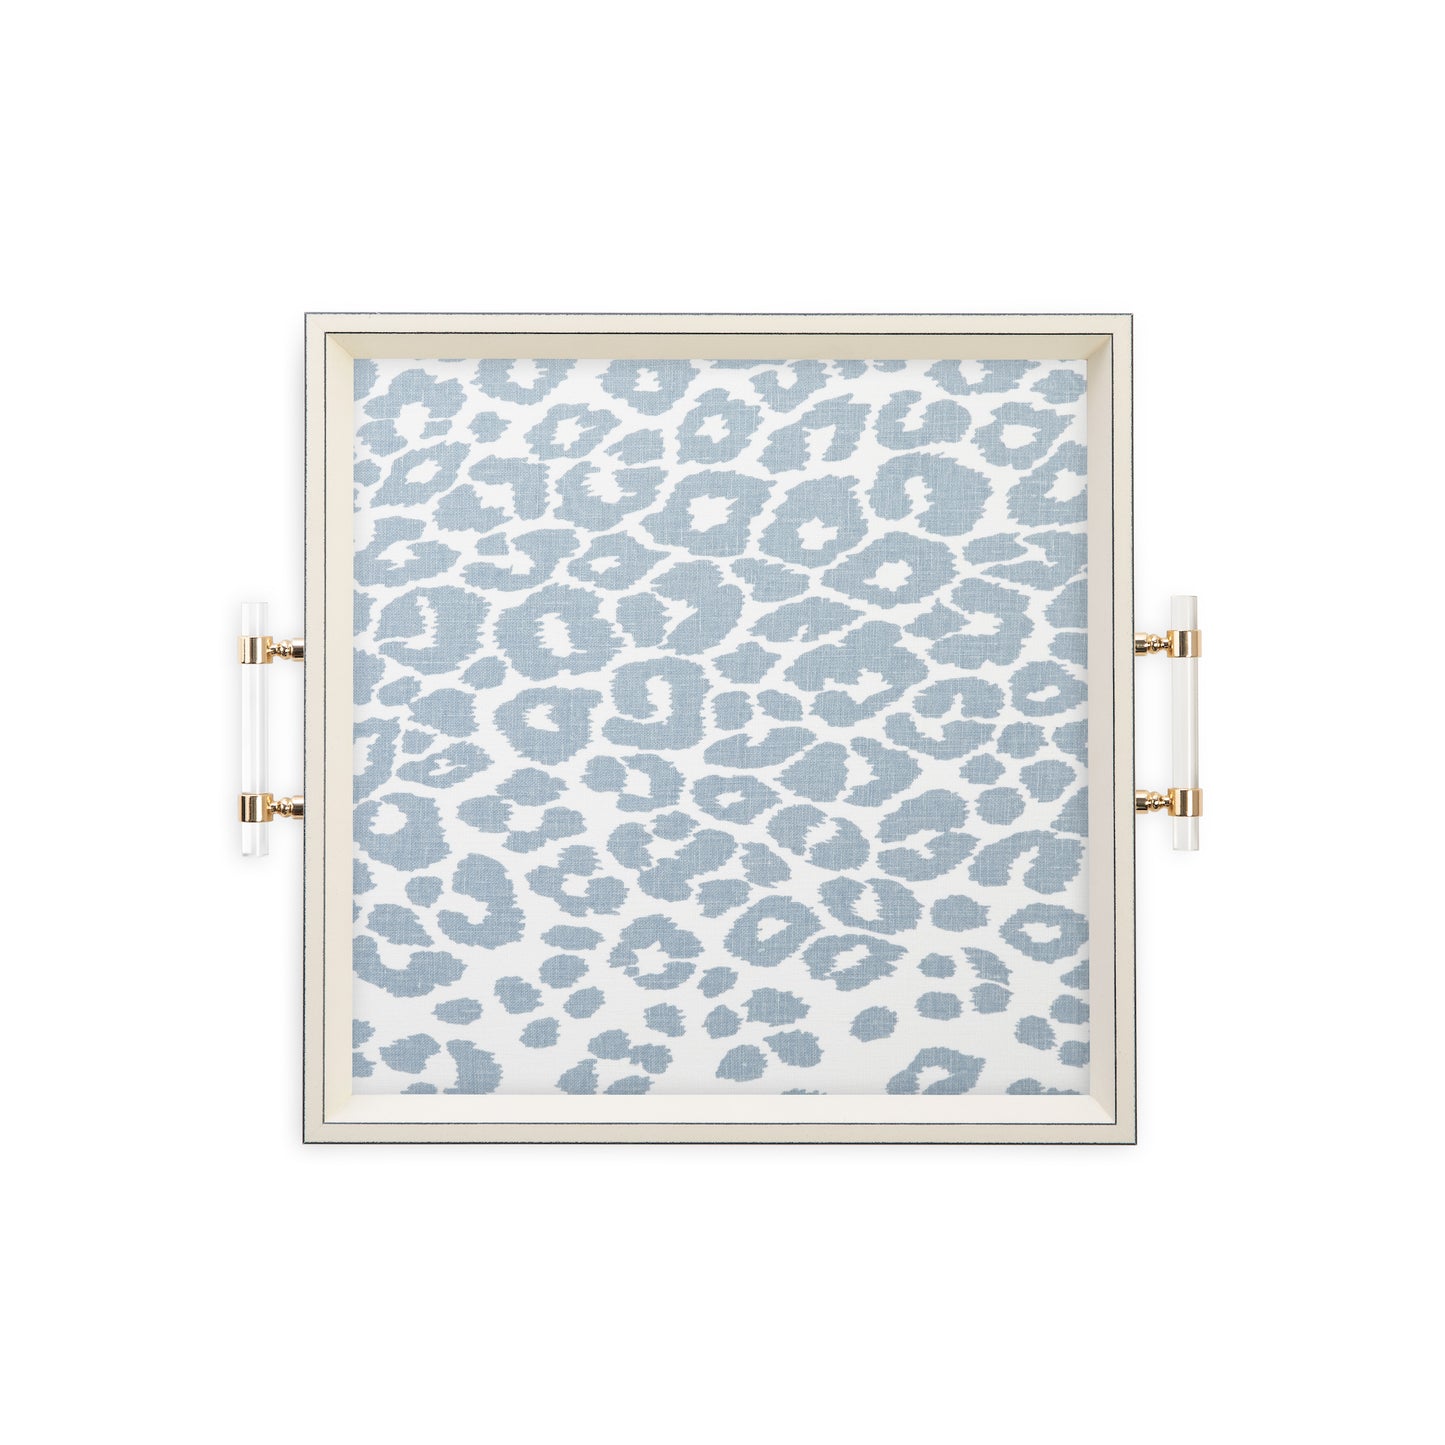 Iconic Leopard Print – Square